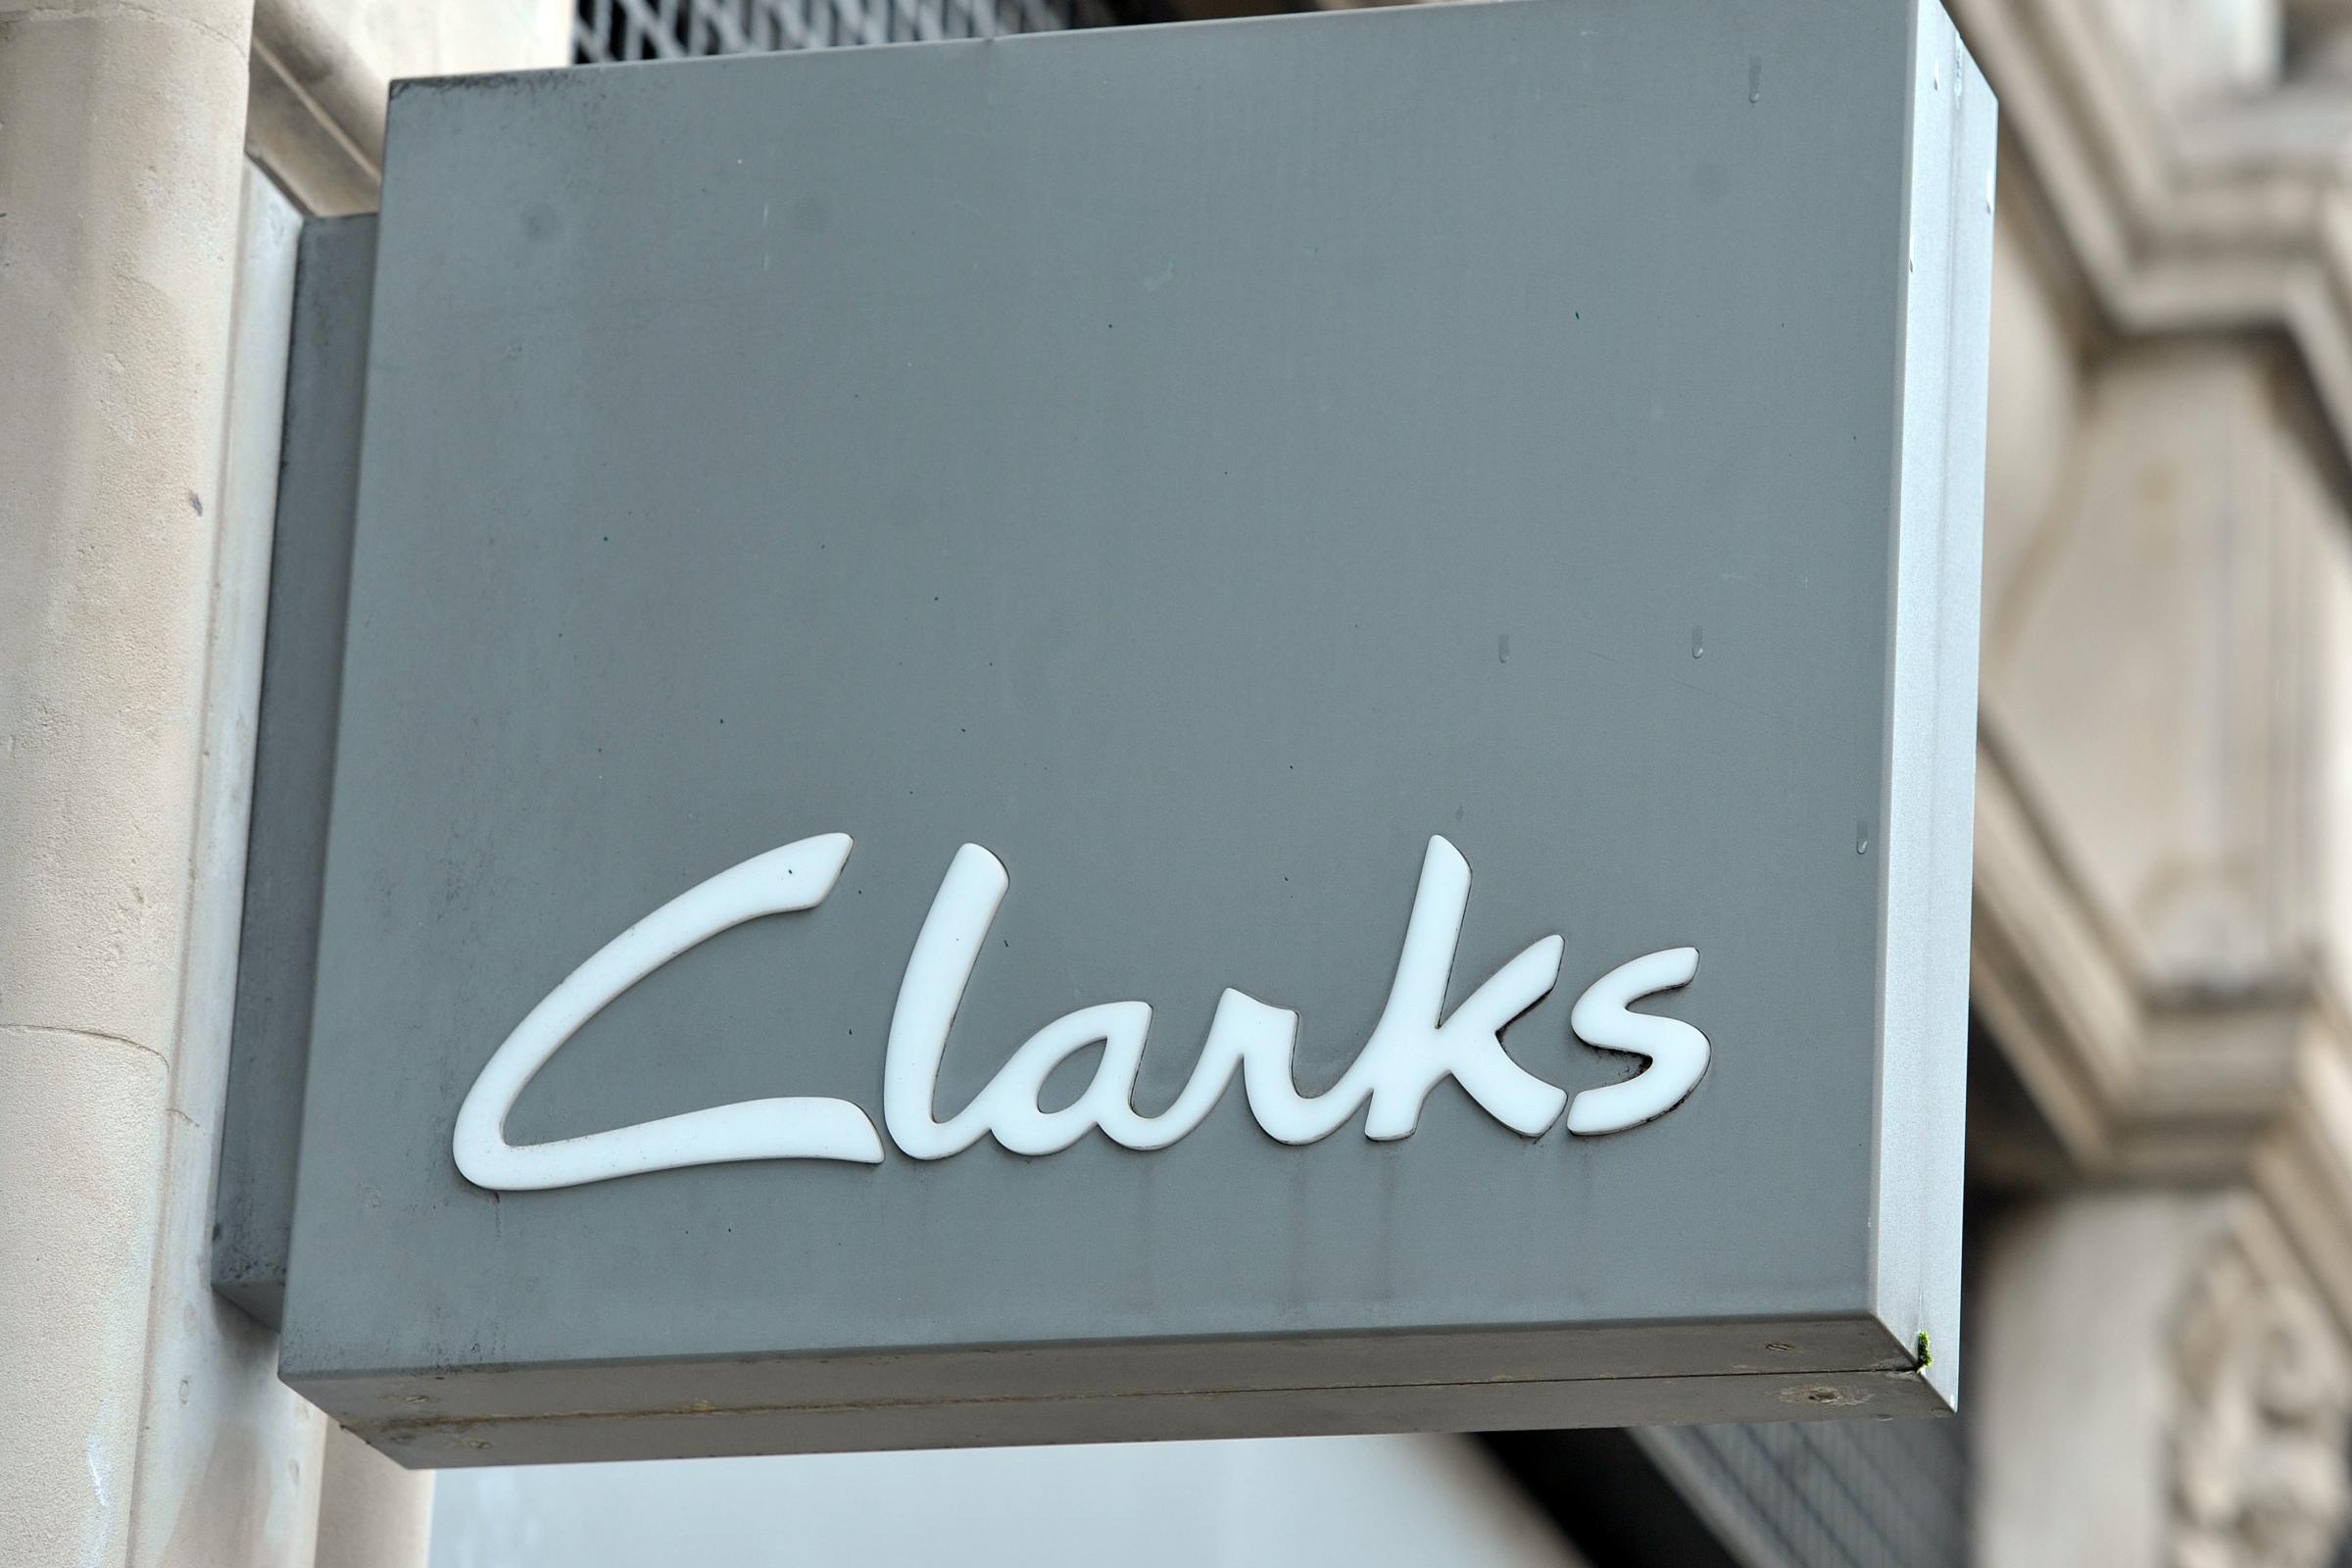 clarks brighton jobs